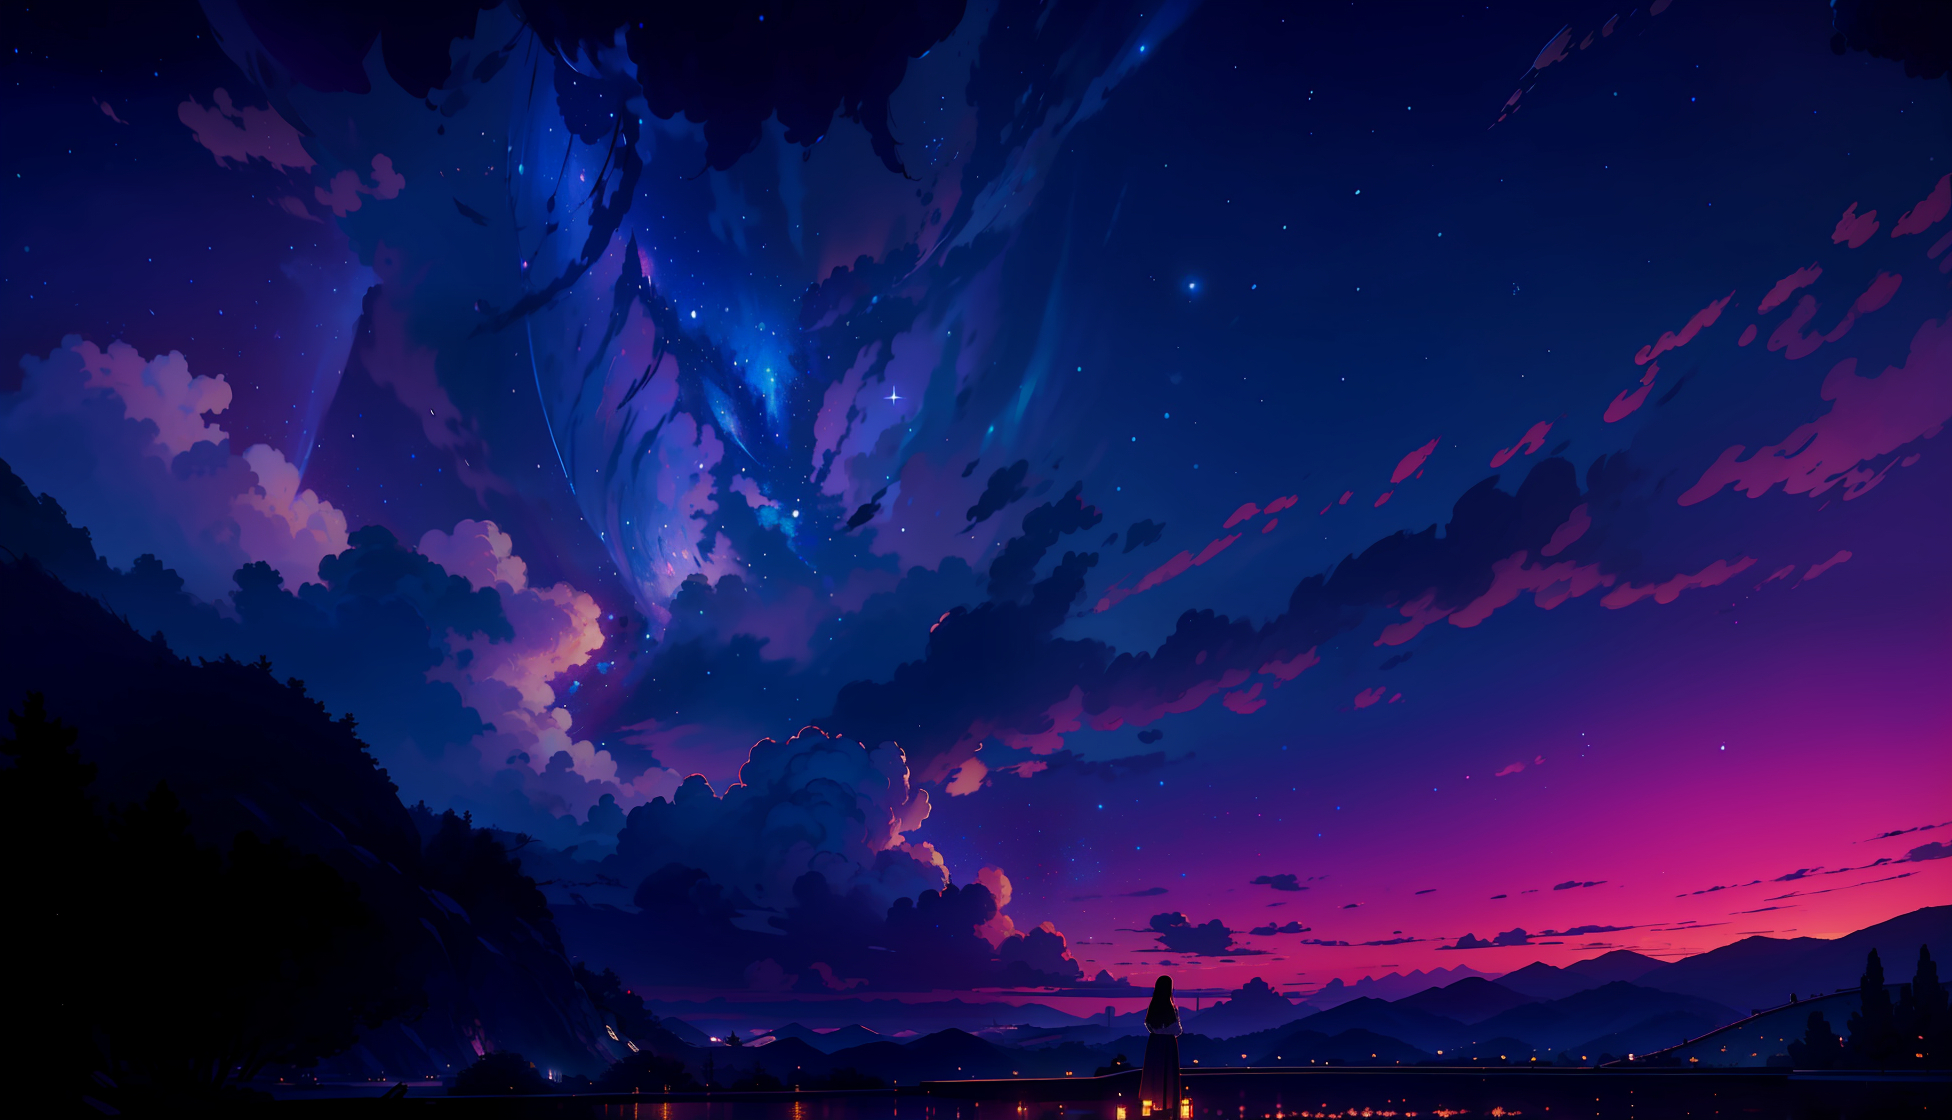 https://images.wallpapersden.com/image/download/amazing-purple-sky-cool-night_bmVsbWWUmZqaraWkpJRmbmpnrWZmZ2U.jpg